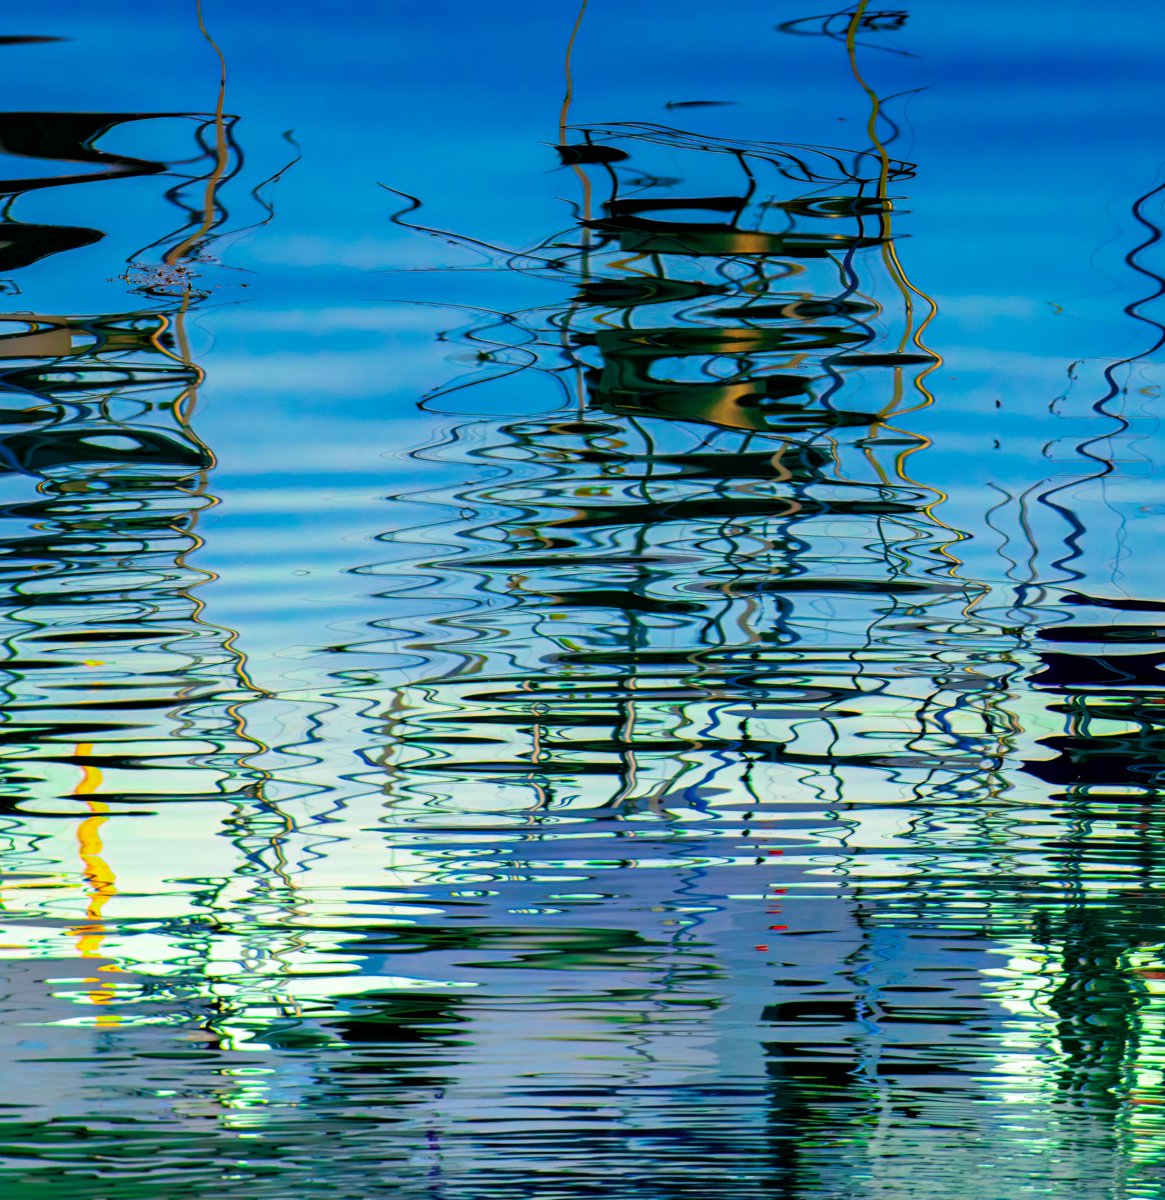 Liquidity

#abstract #abstractart #abstractphotography #abstractphotoart #photography #water #waterphotography